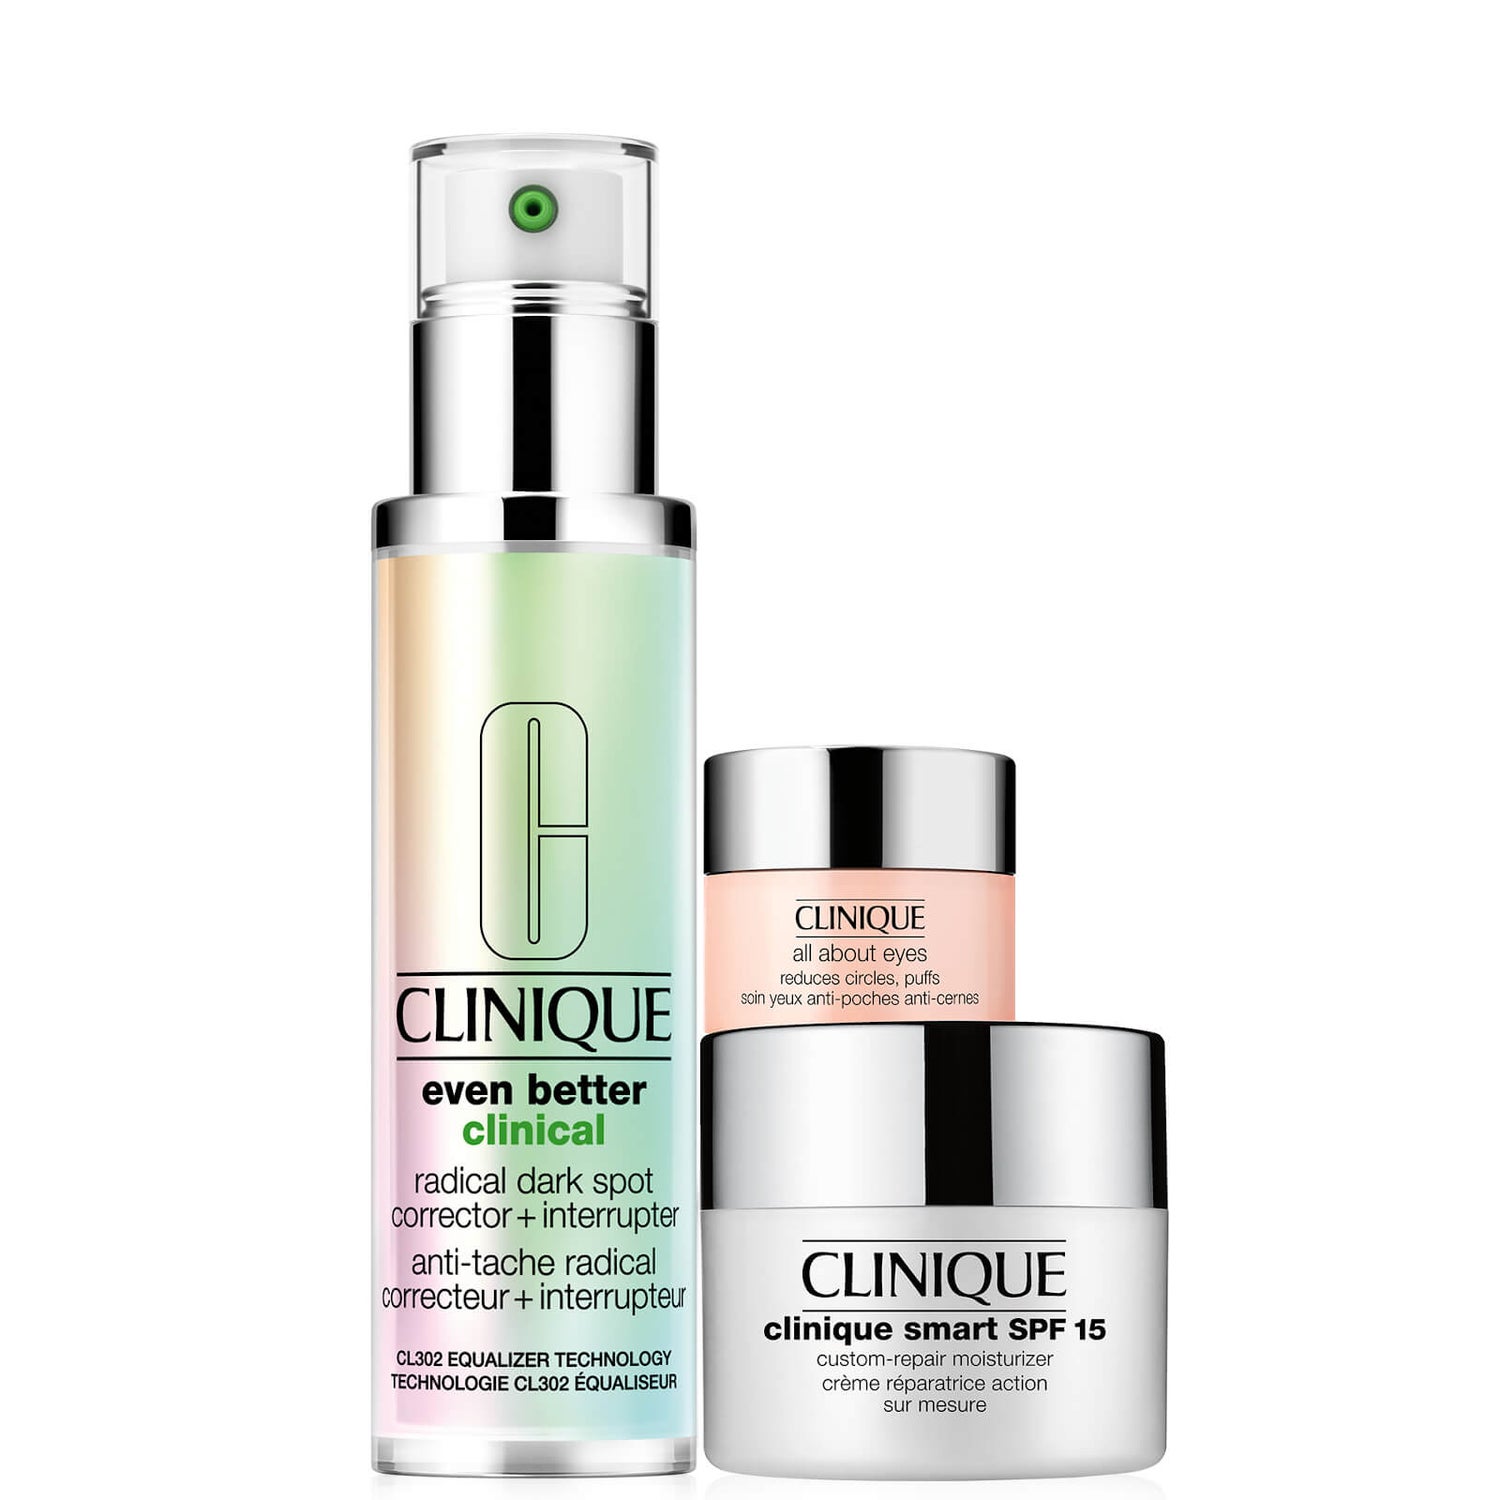 Clinique Even Tone Essentials Skincare Set